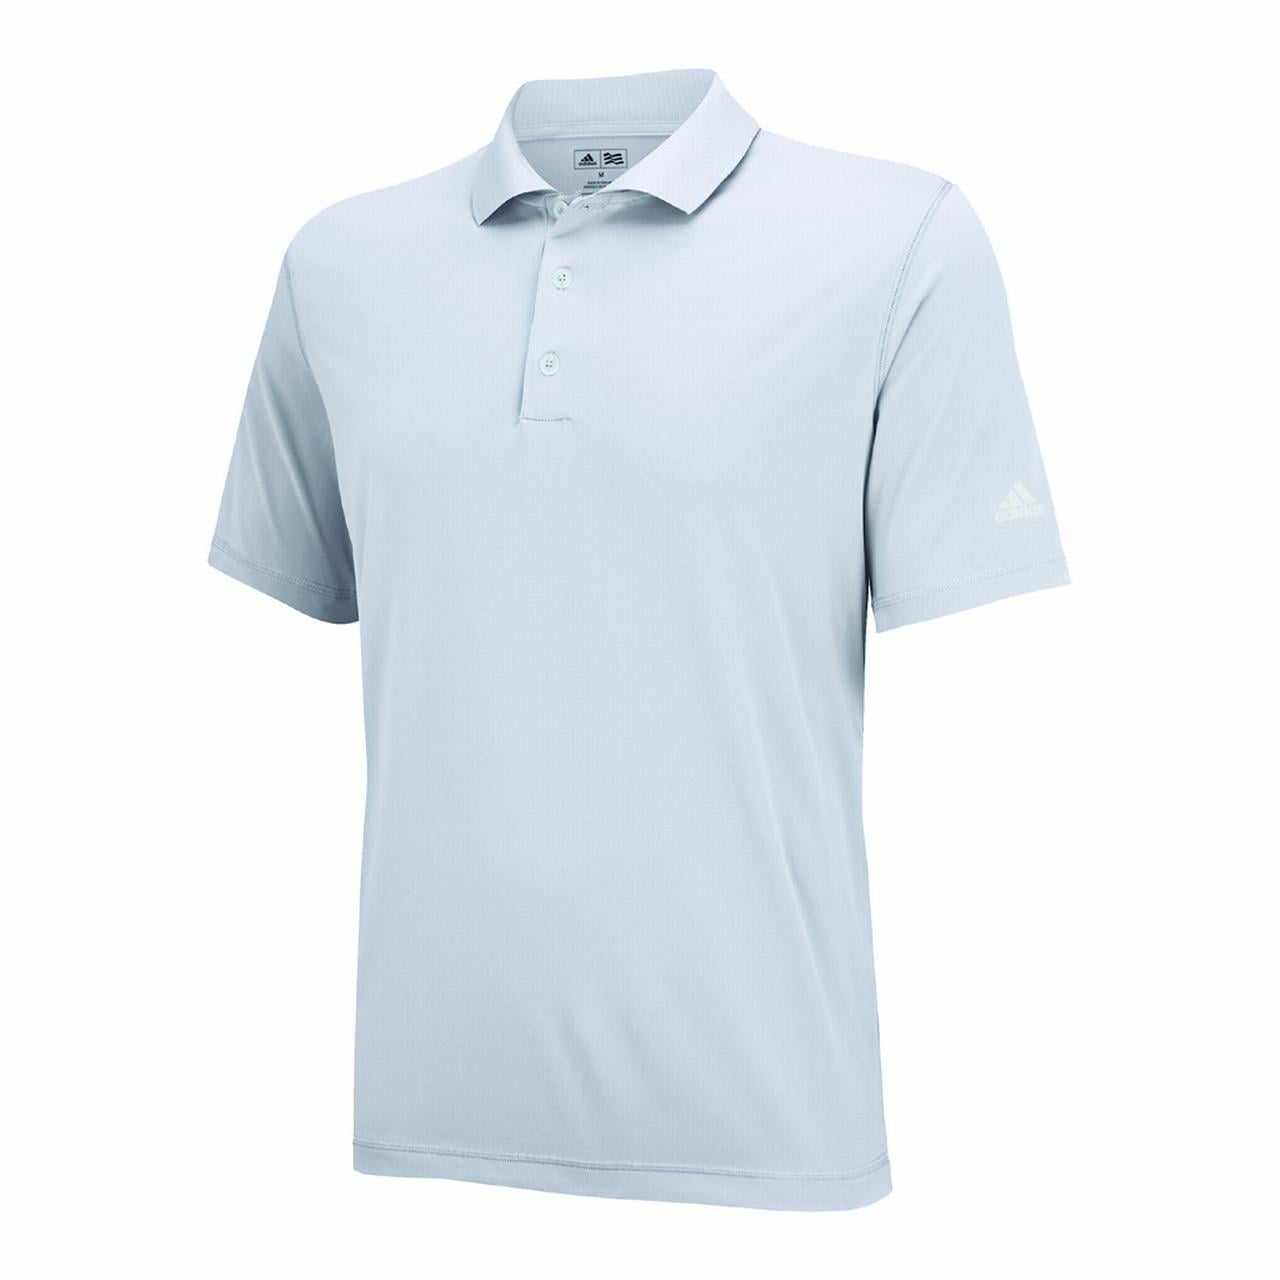 Adidas Golf ClimaCool 3 Stripes Golf Shirt Mens CLOSEOUT New - Choose ...